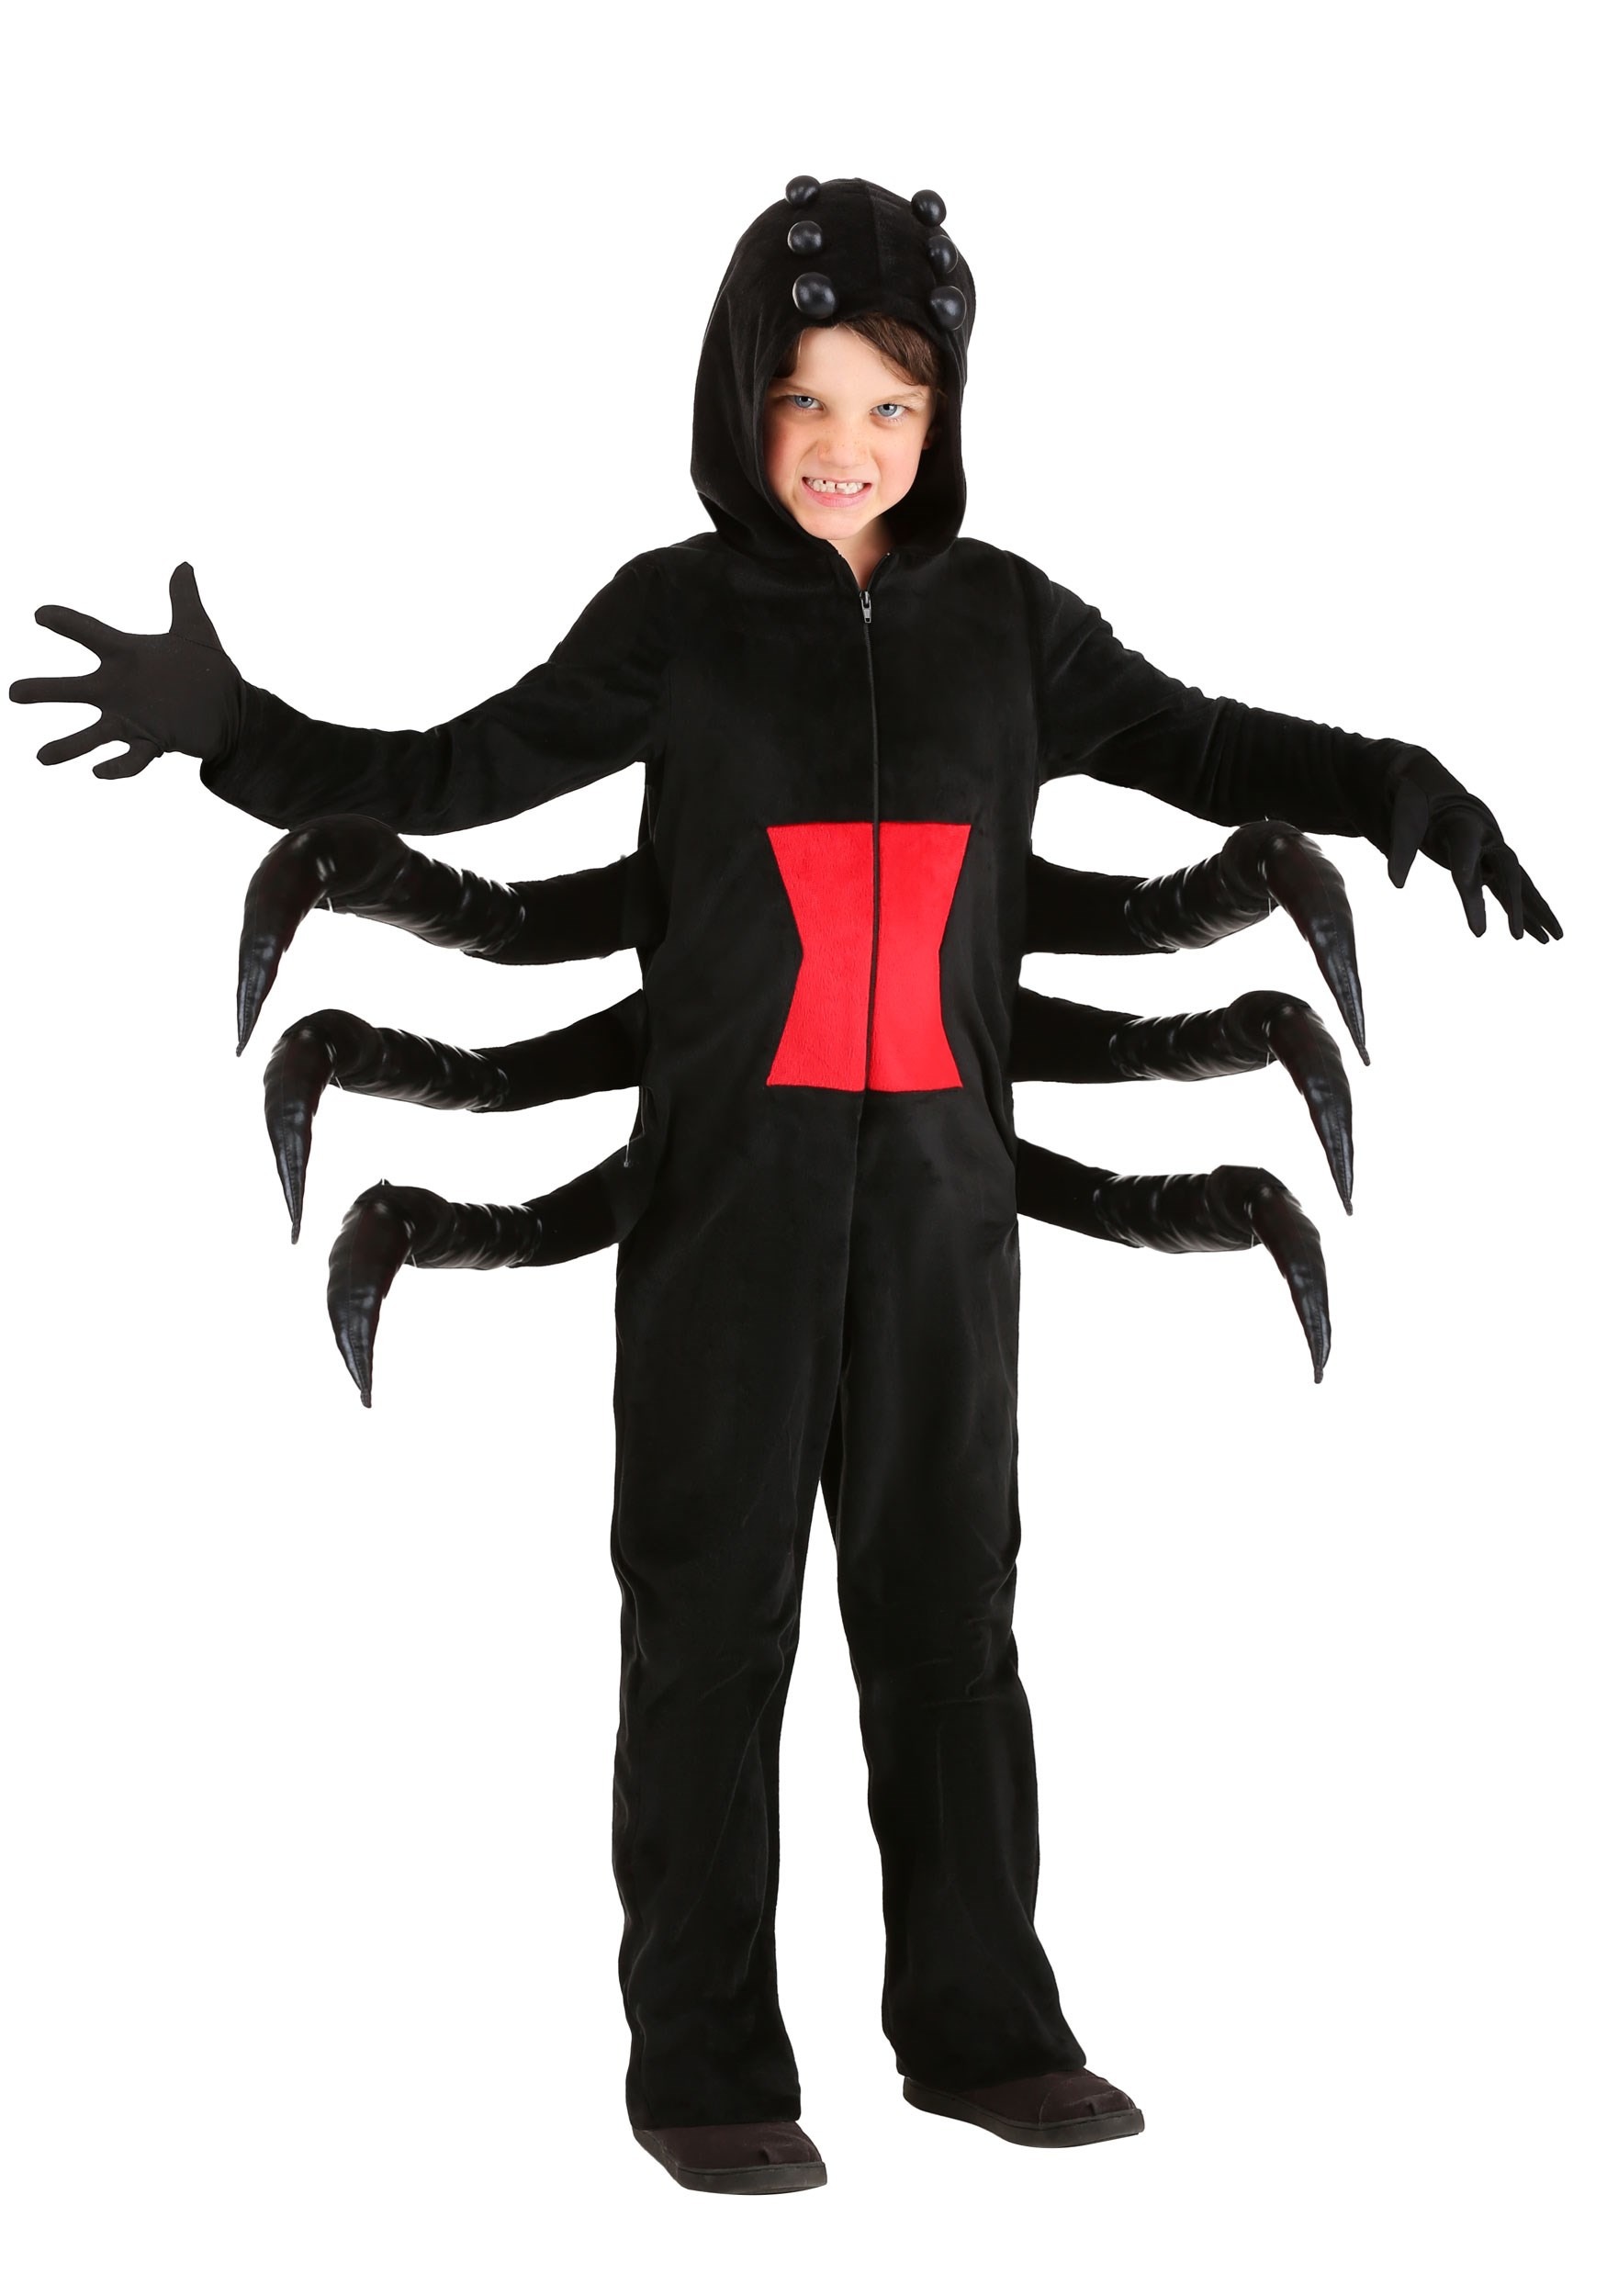 Kid's Comfortable Spider Costume